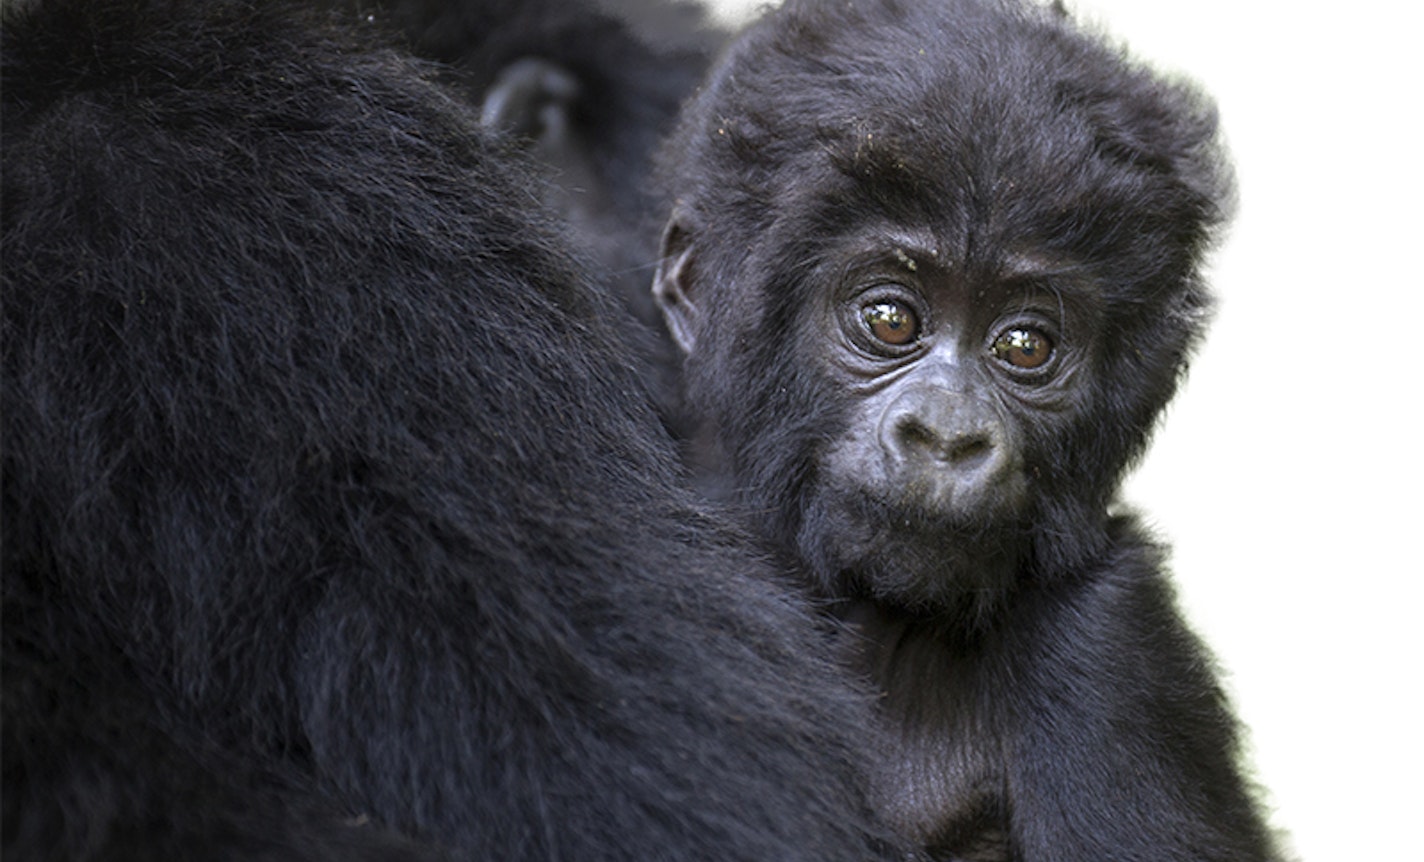 singing bowl sound bath.  a fundaiser for Uganda's Gorillas